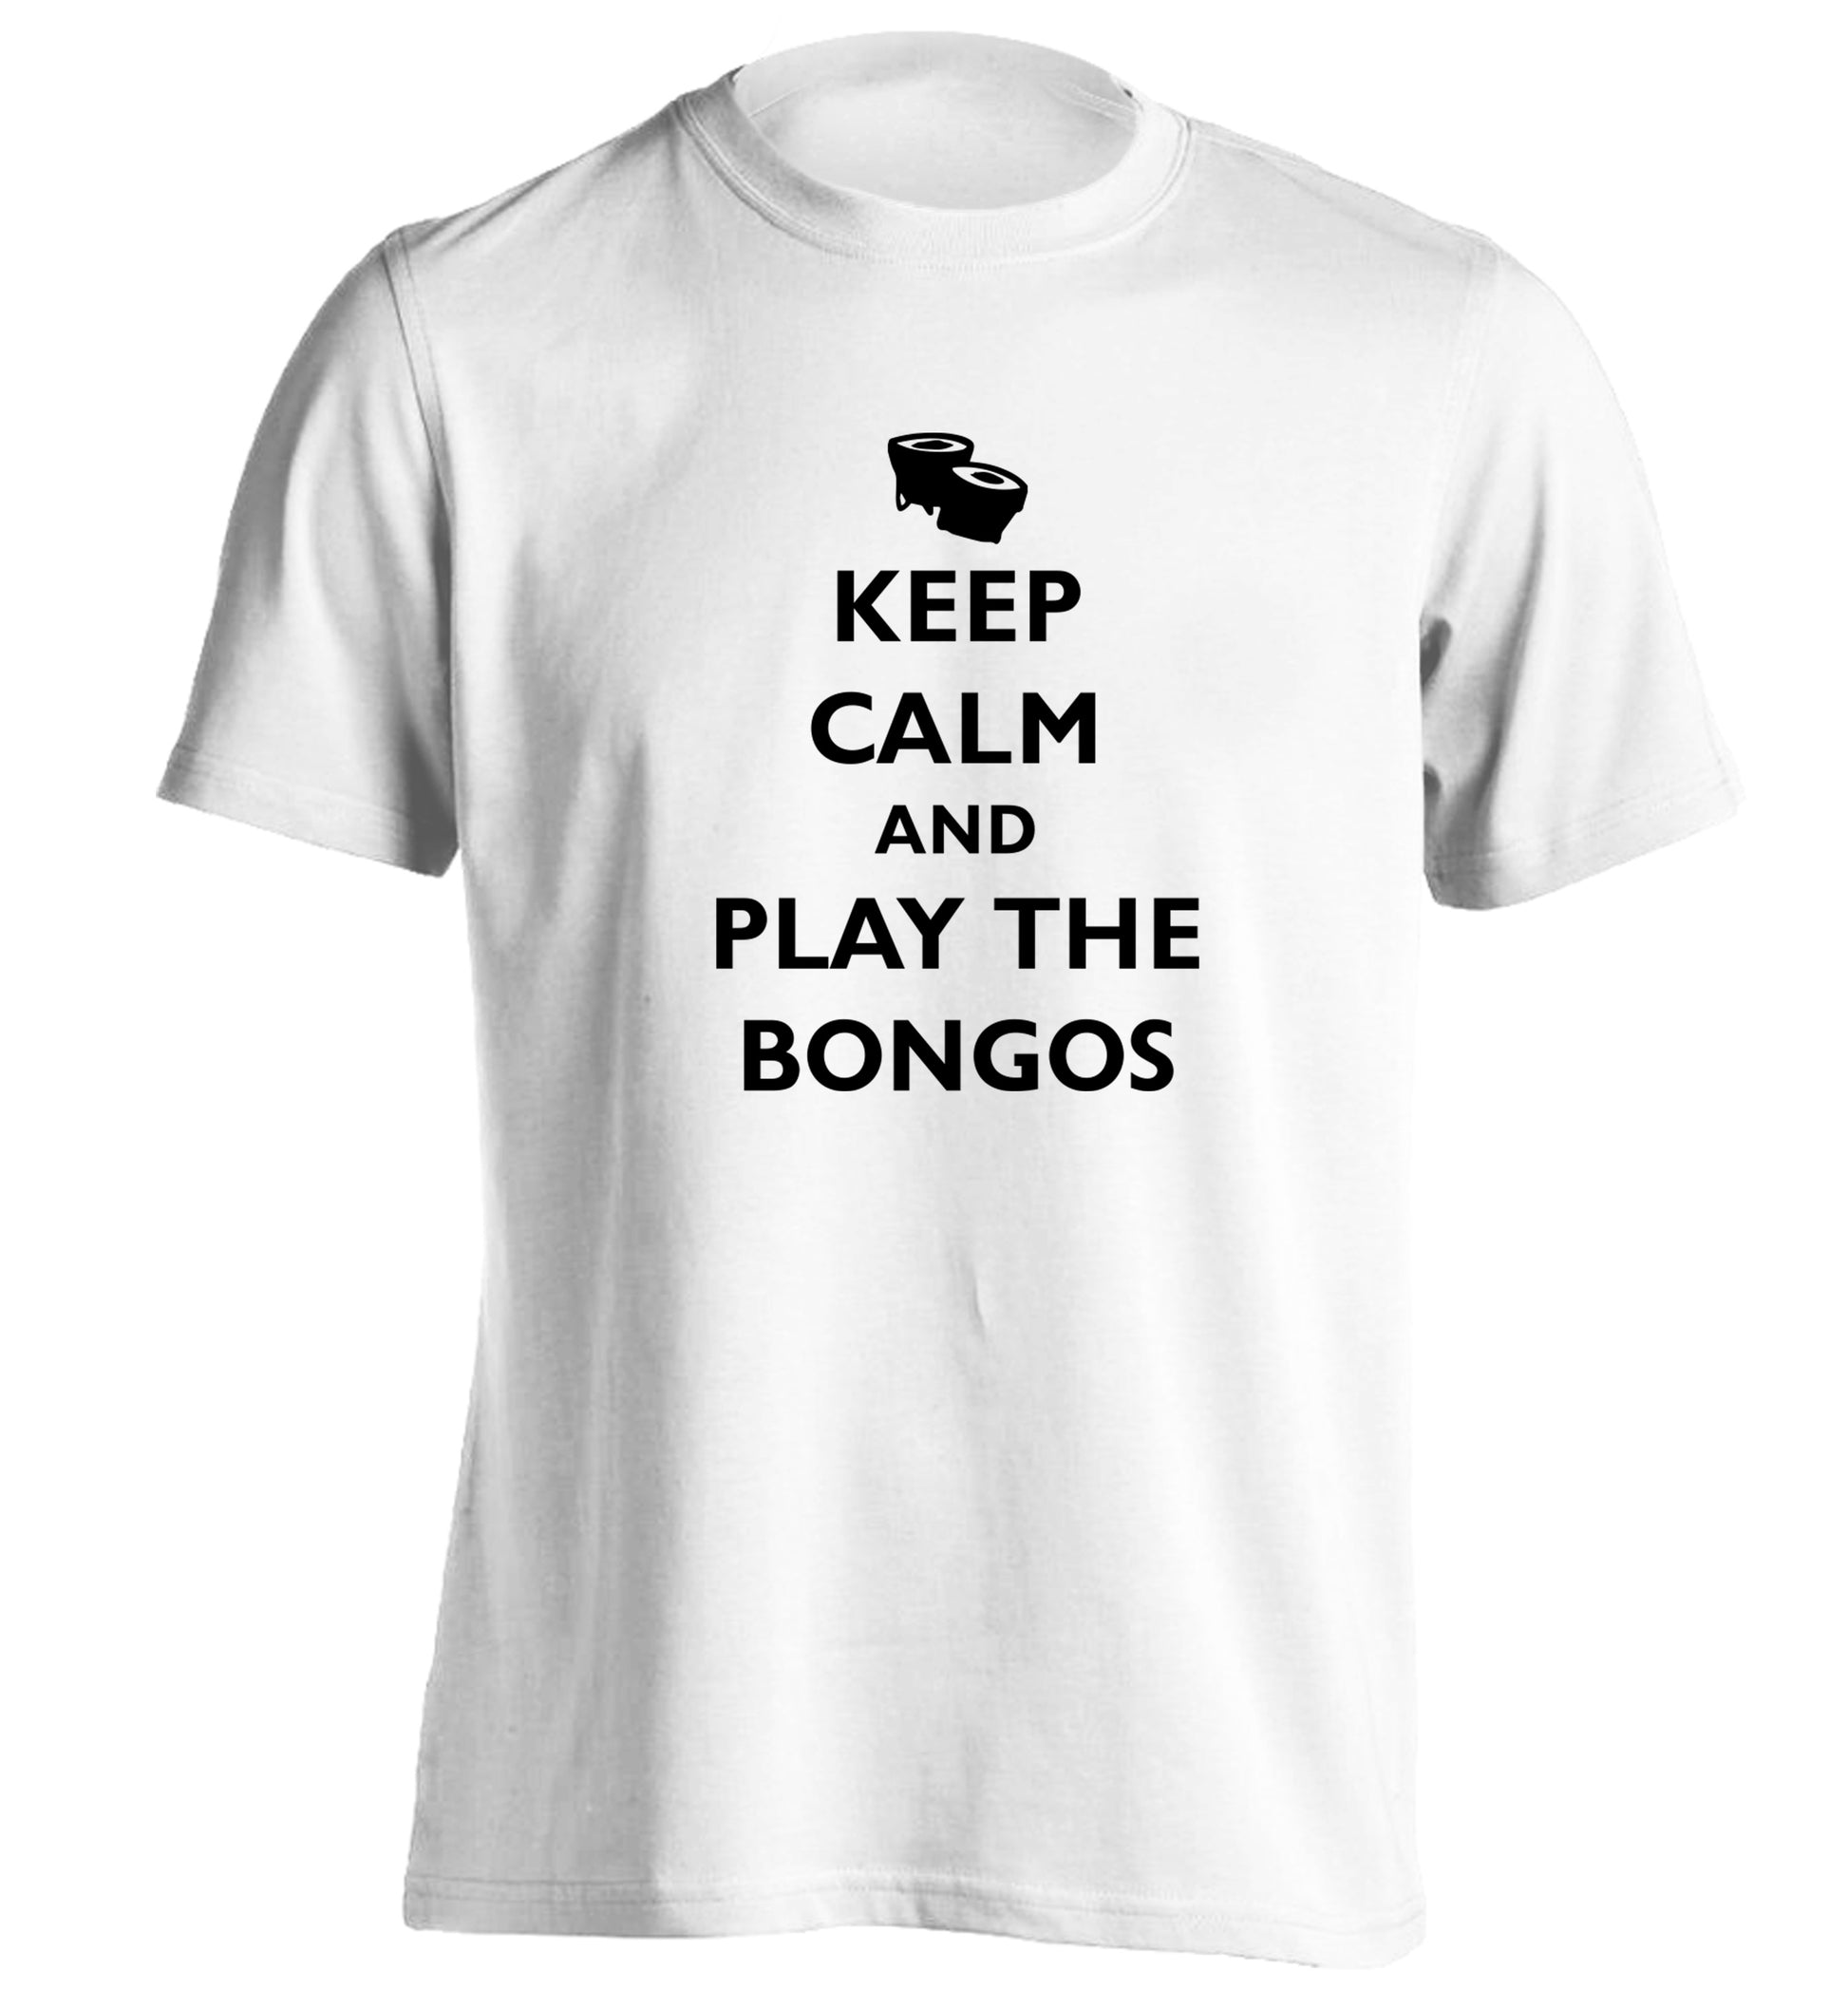 Keep calm and play the bongos adults unisex white Tshirt 2XL